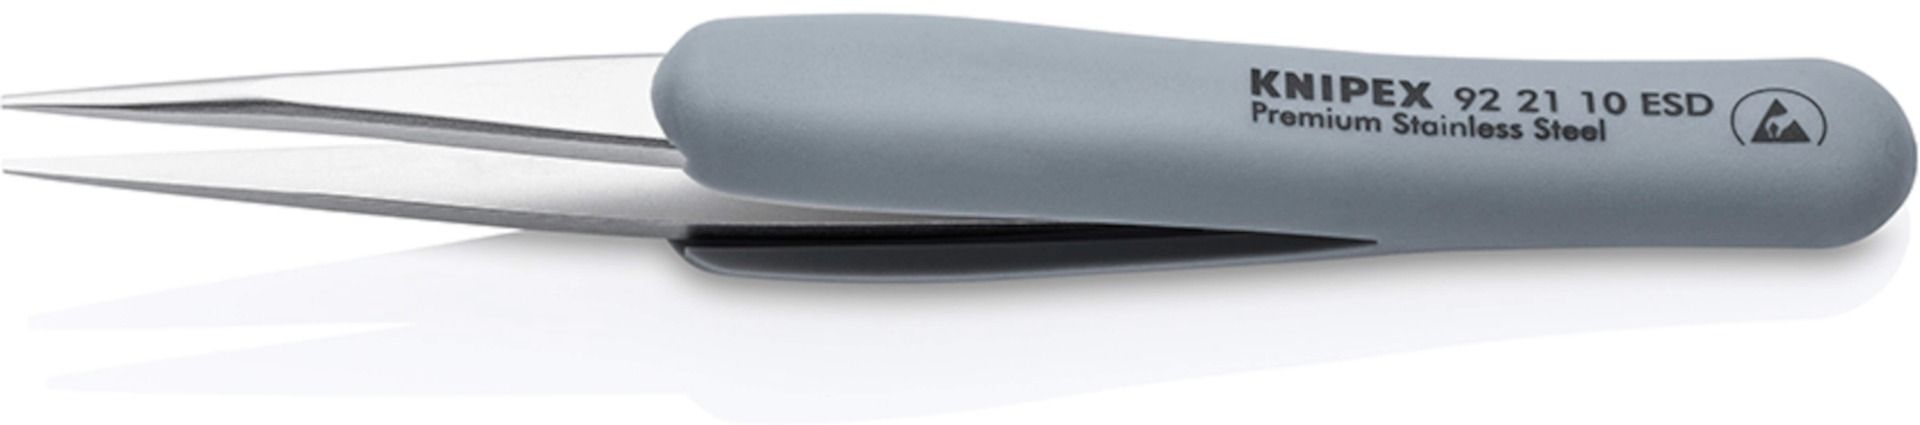 Knipex ESD precizna pinceta sa gumiranim ručkama (92 21 10 ESD)